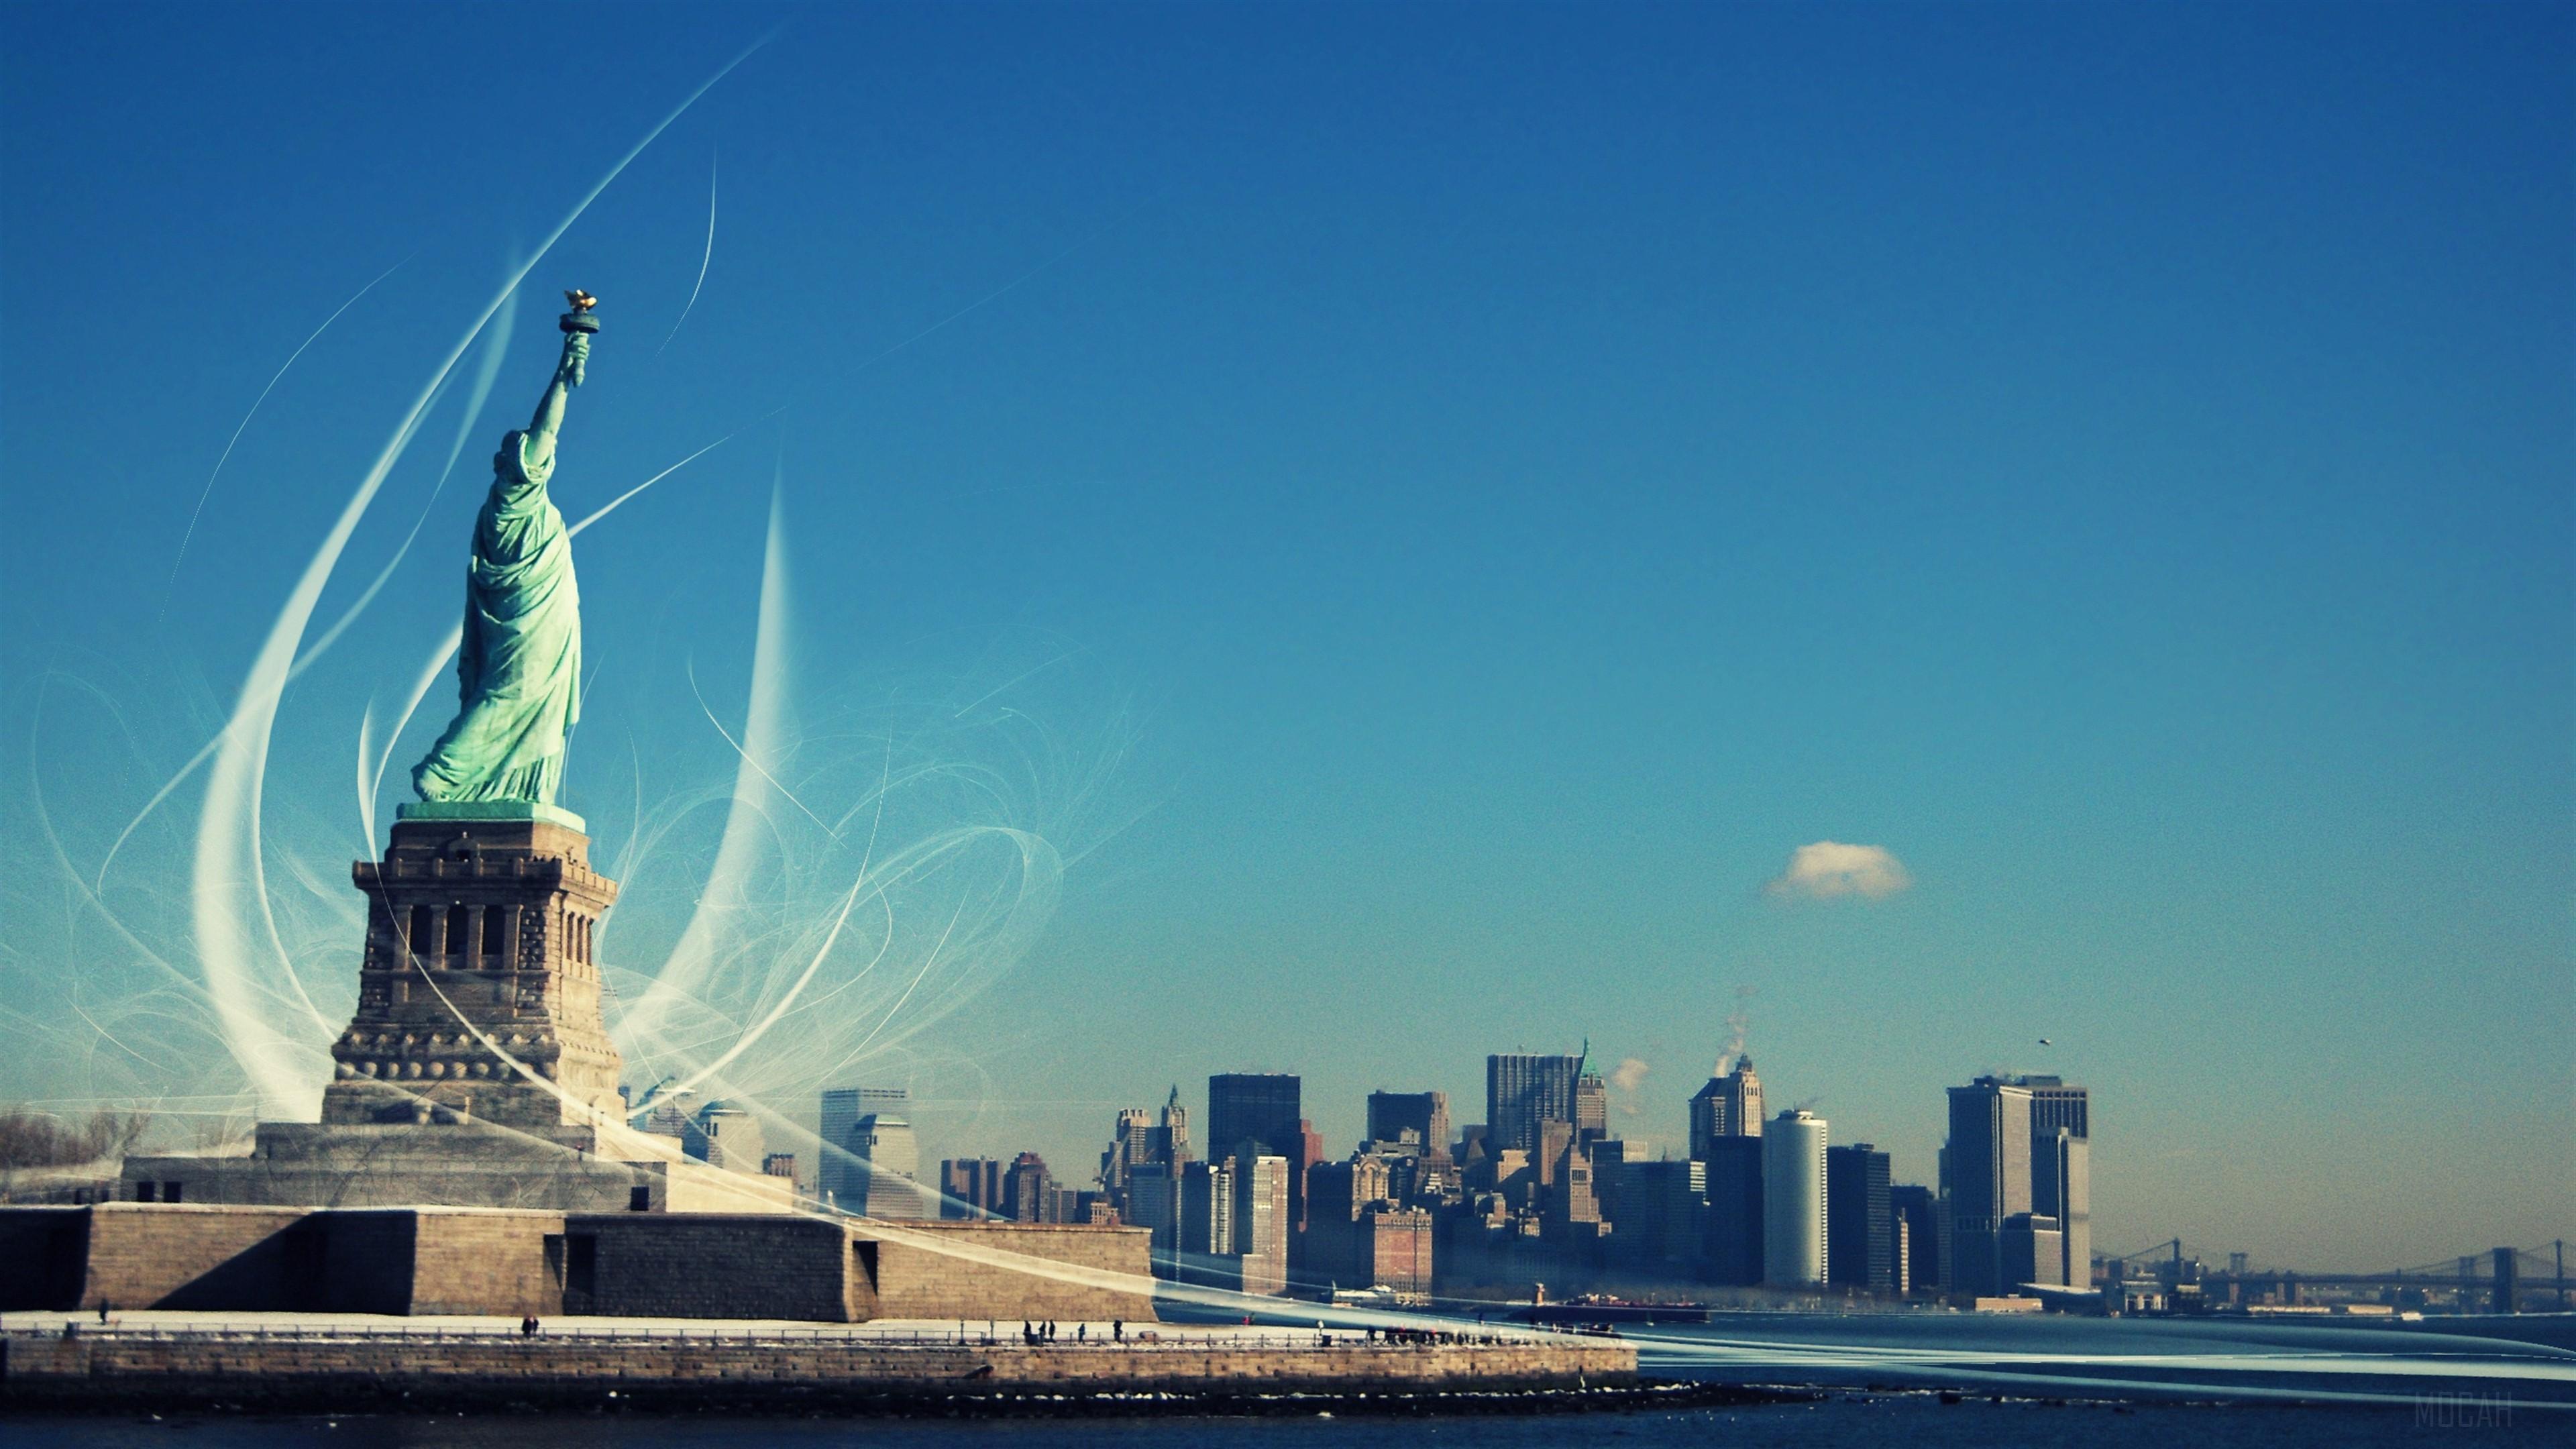 HD wallpaper, New Yorks Statue Of Liberty 4K